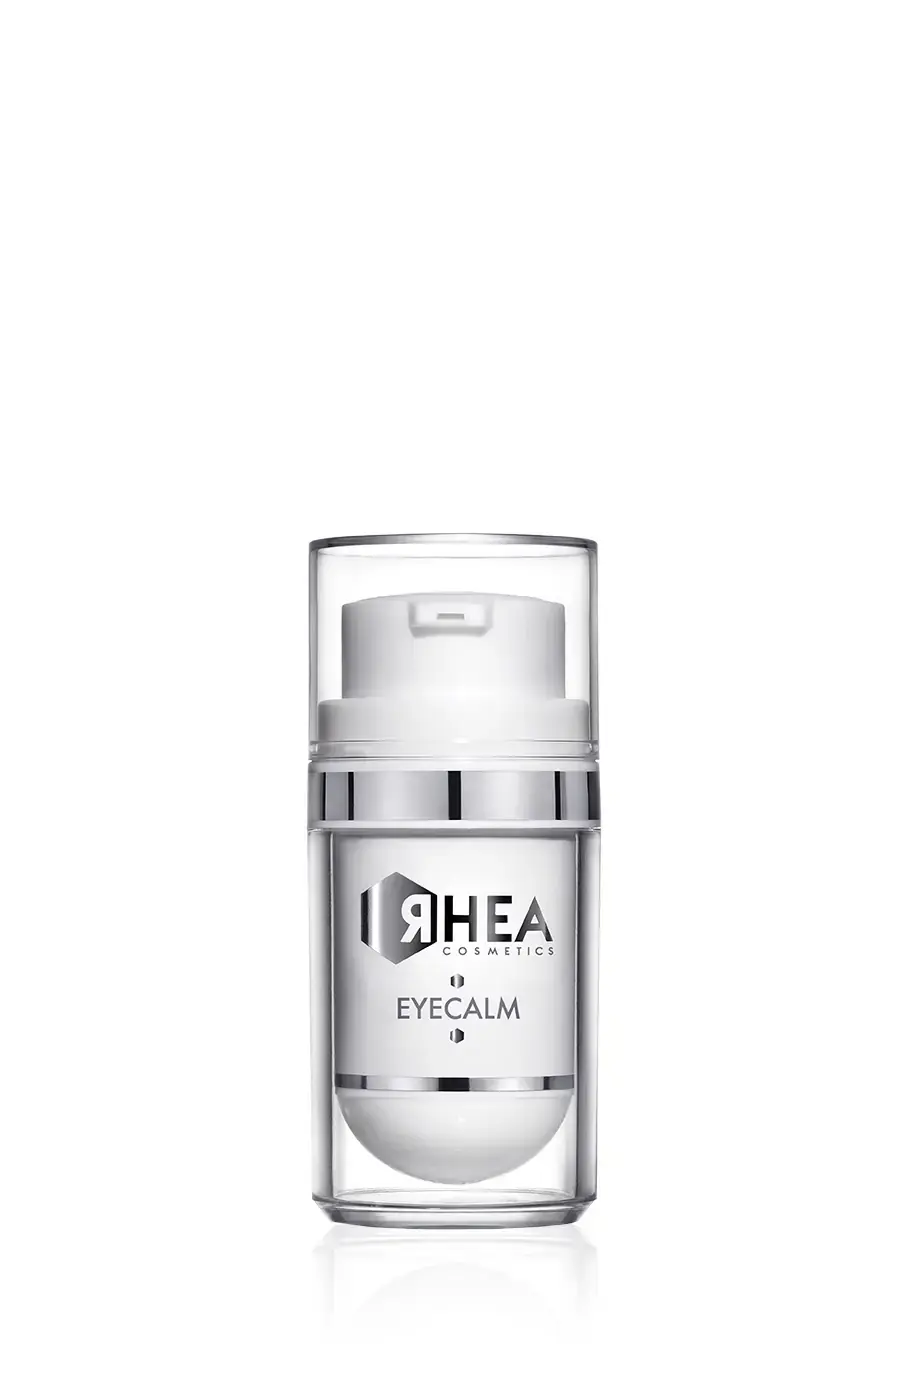 RHEA Cosmetics EyeCalm - Anti-Dark Circle Eye Cream